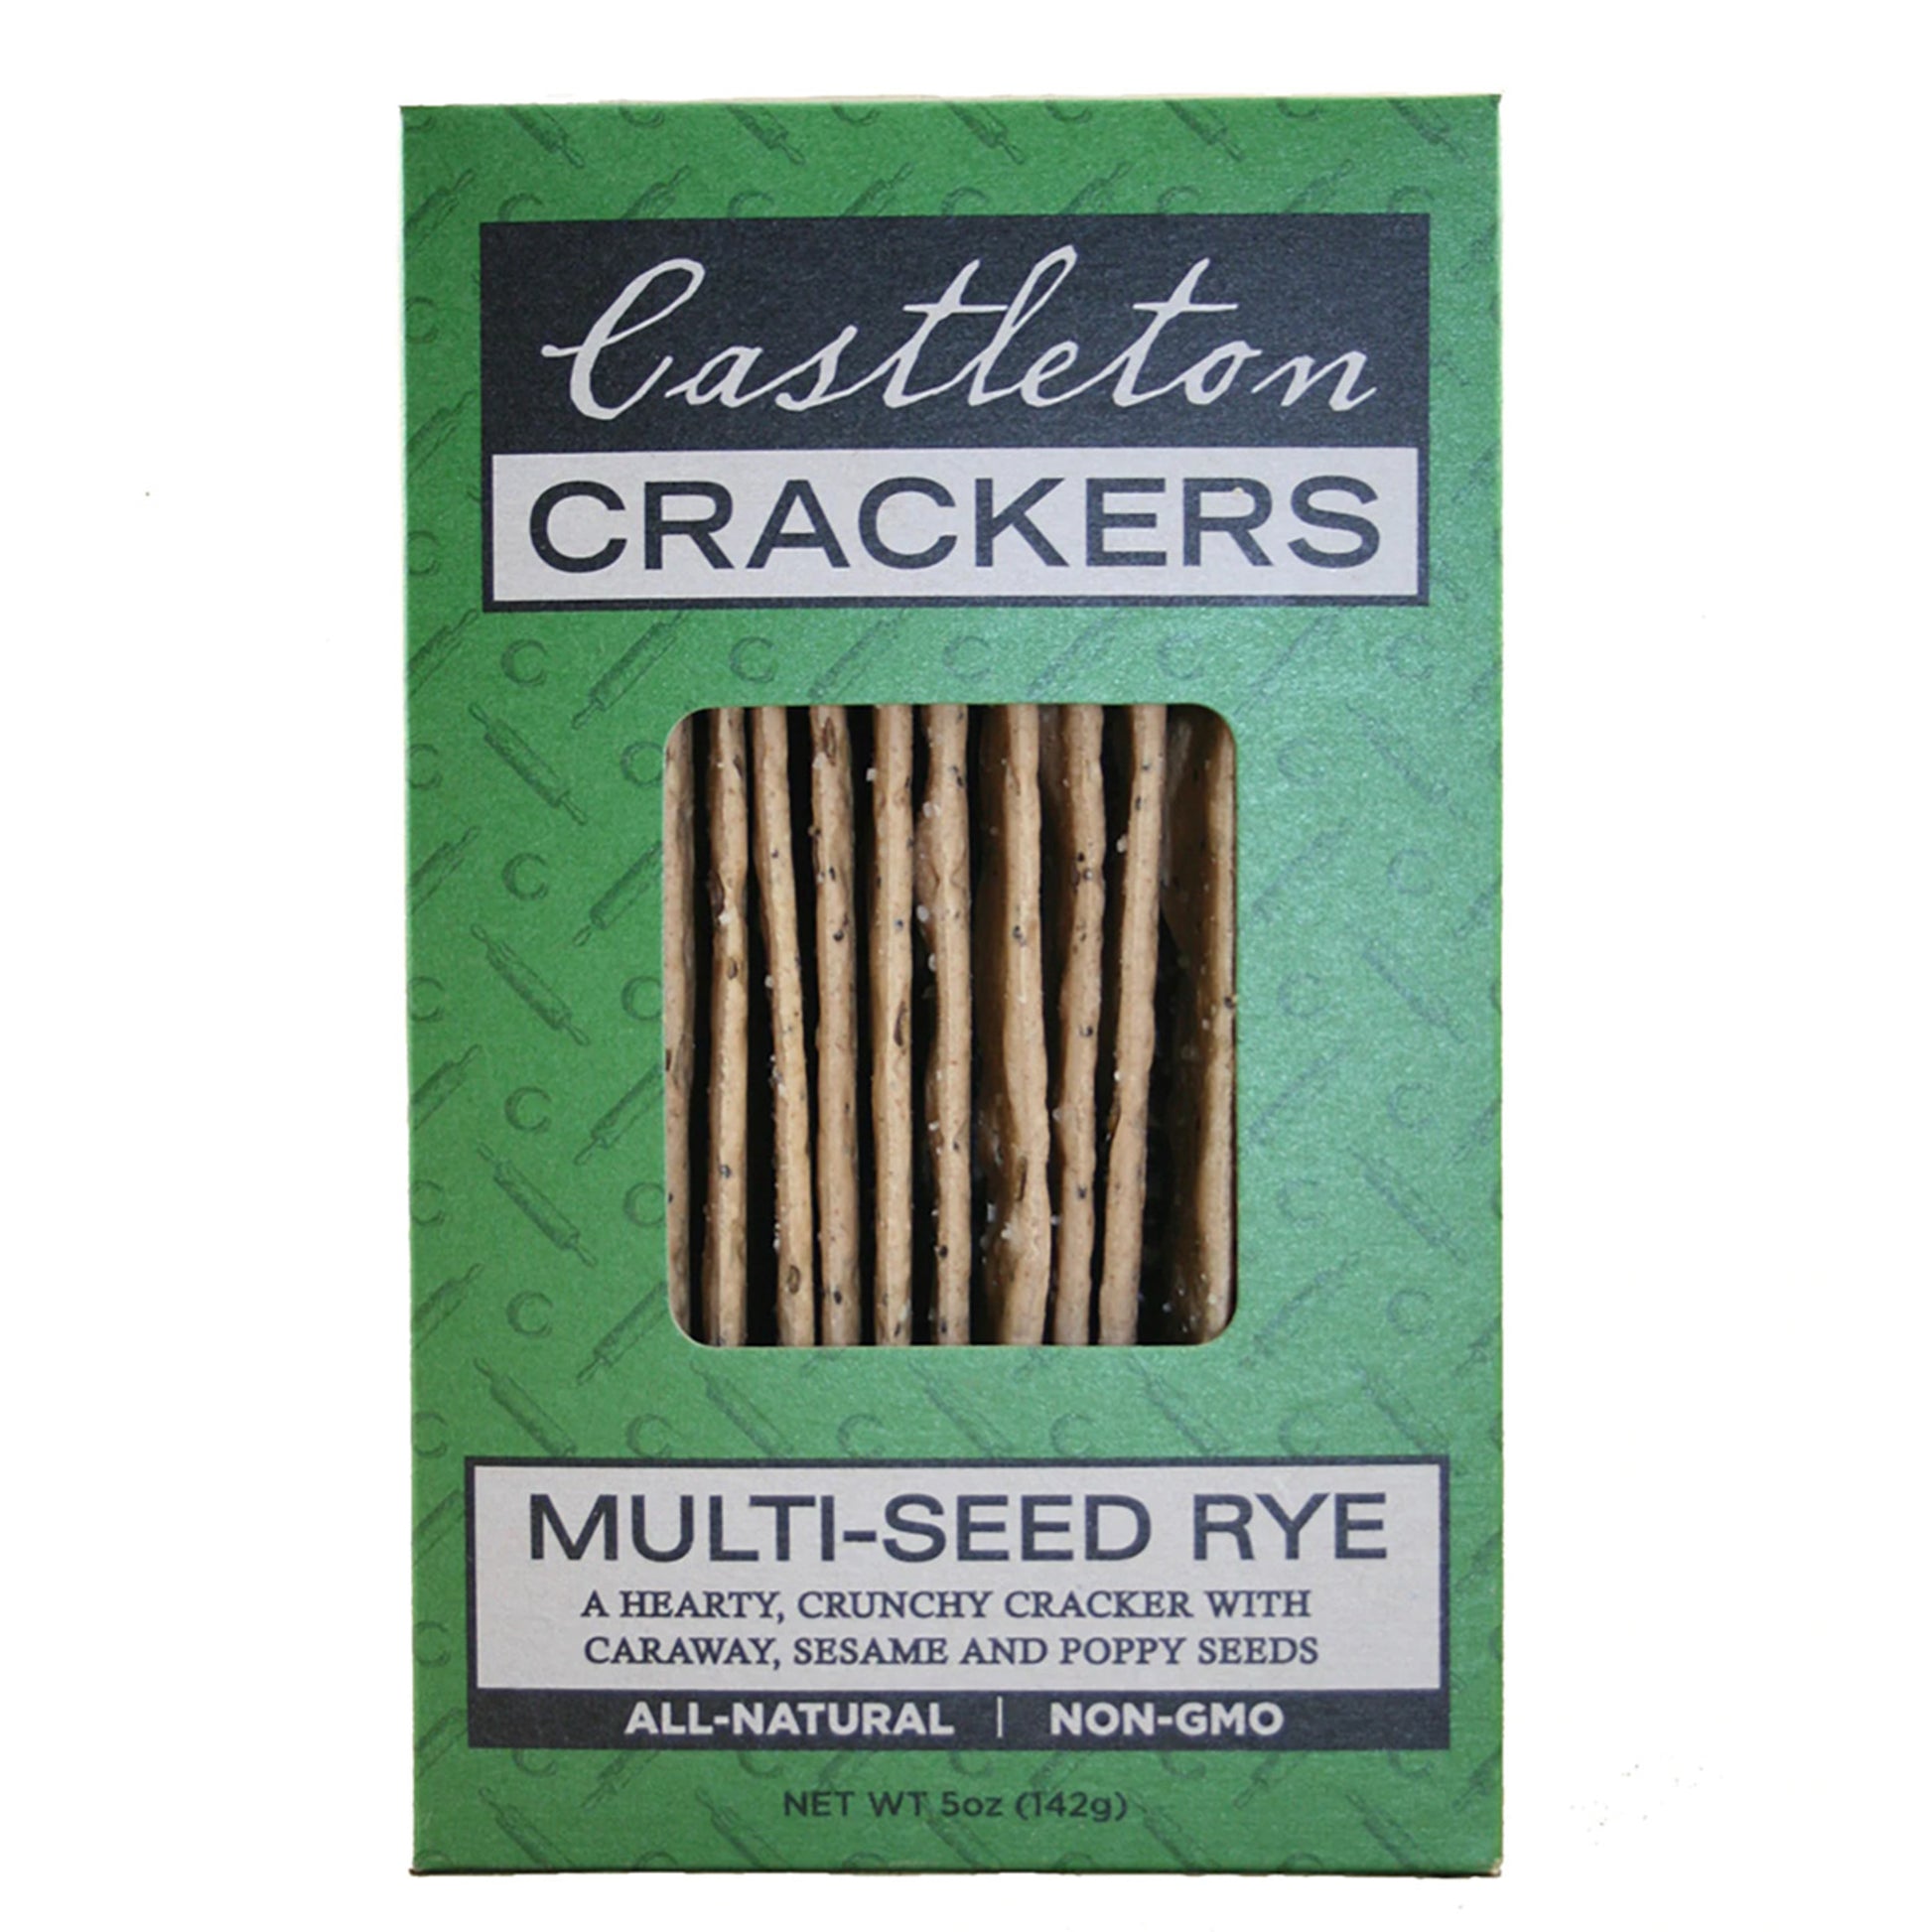 Castleton Crackers' Multi-Seed Rye